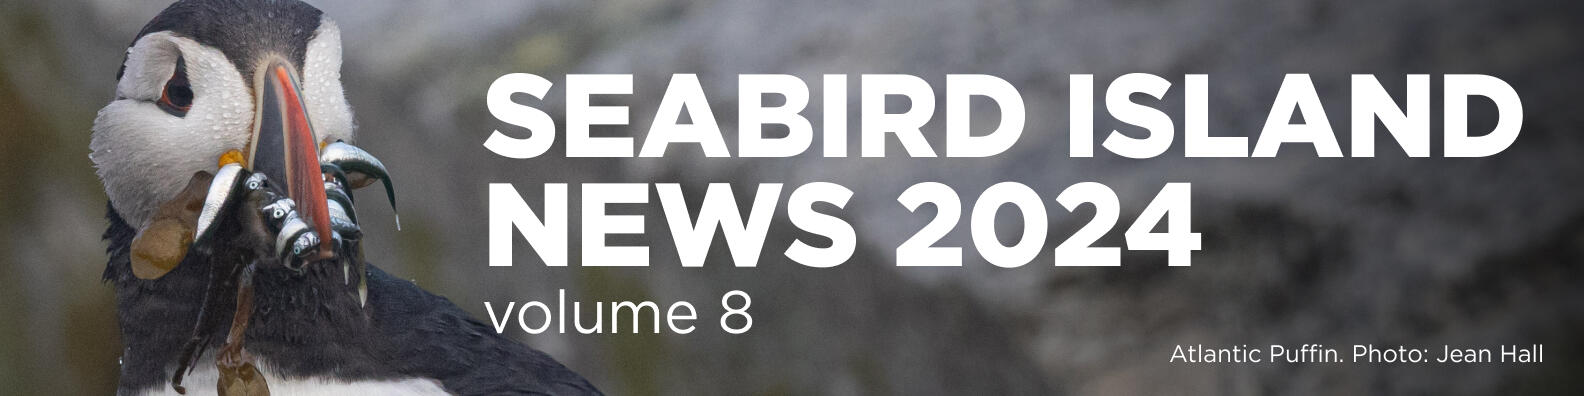 Seabird Island News Banner - Volume 08